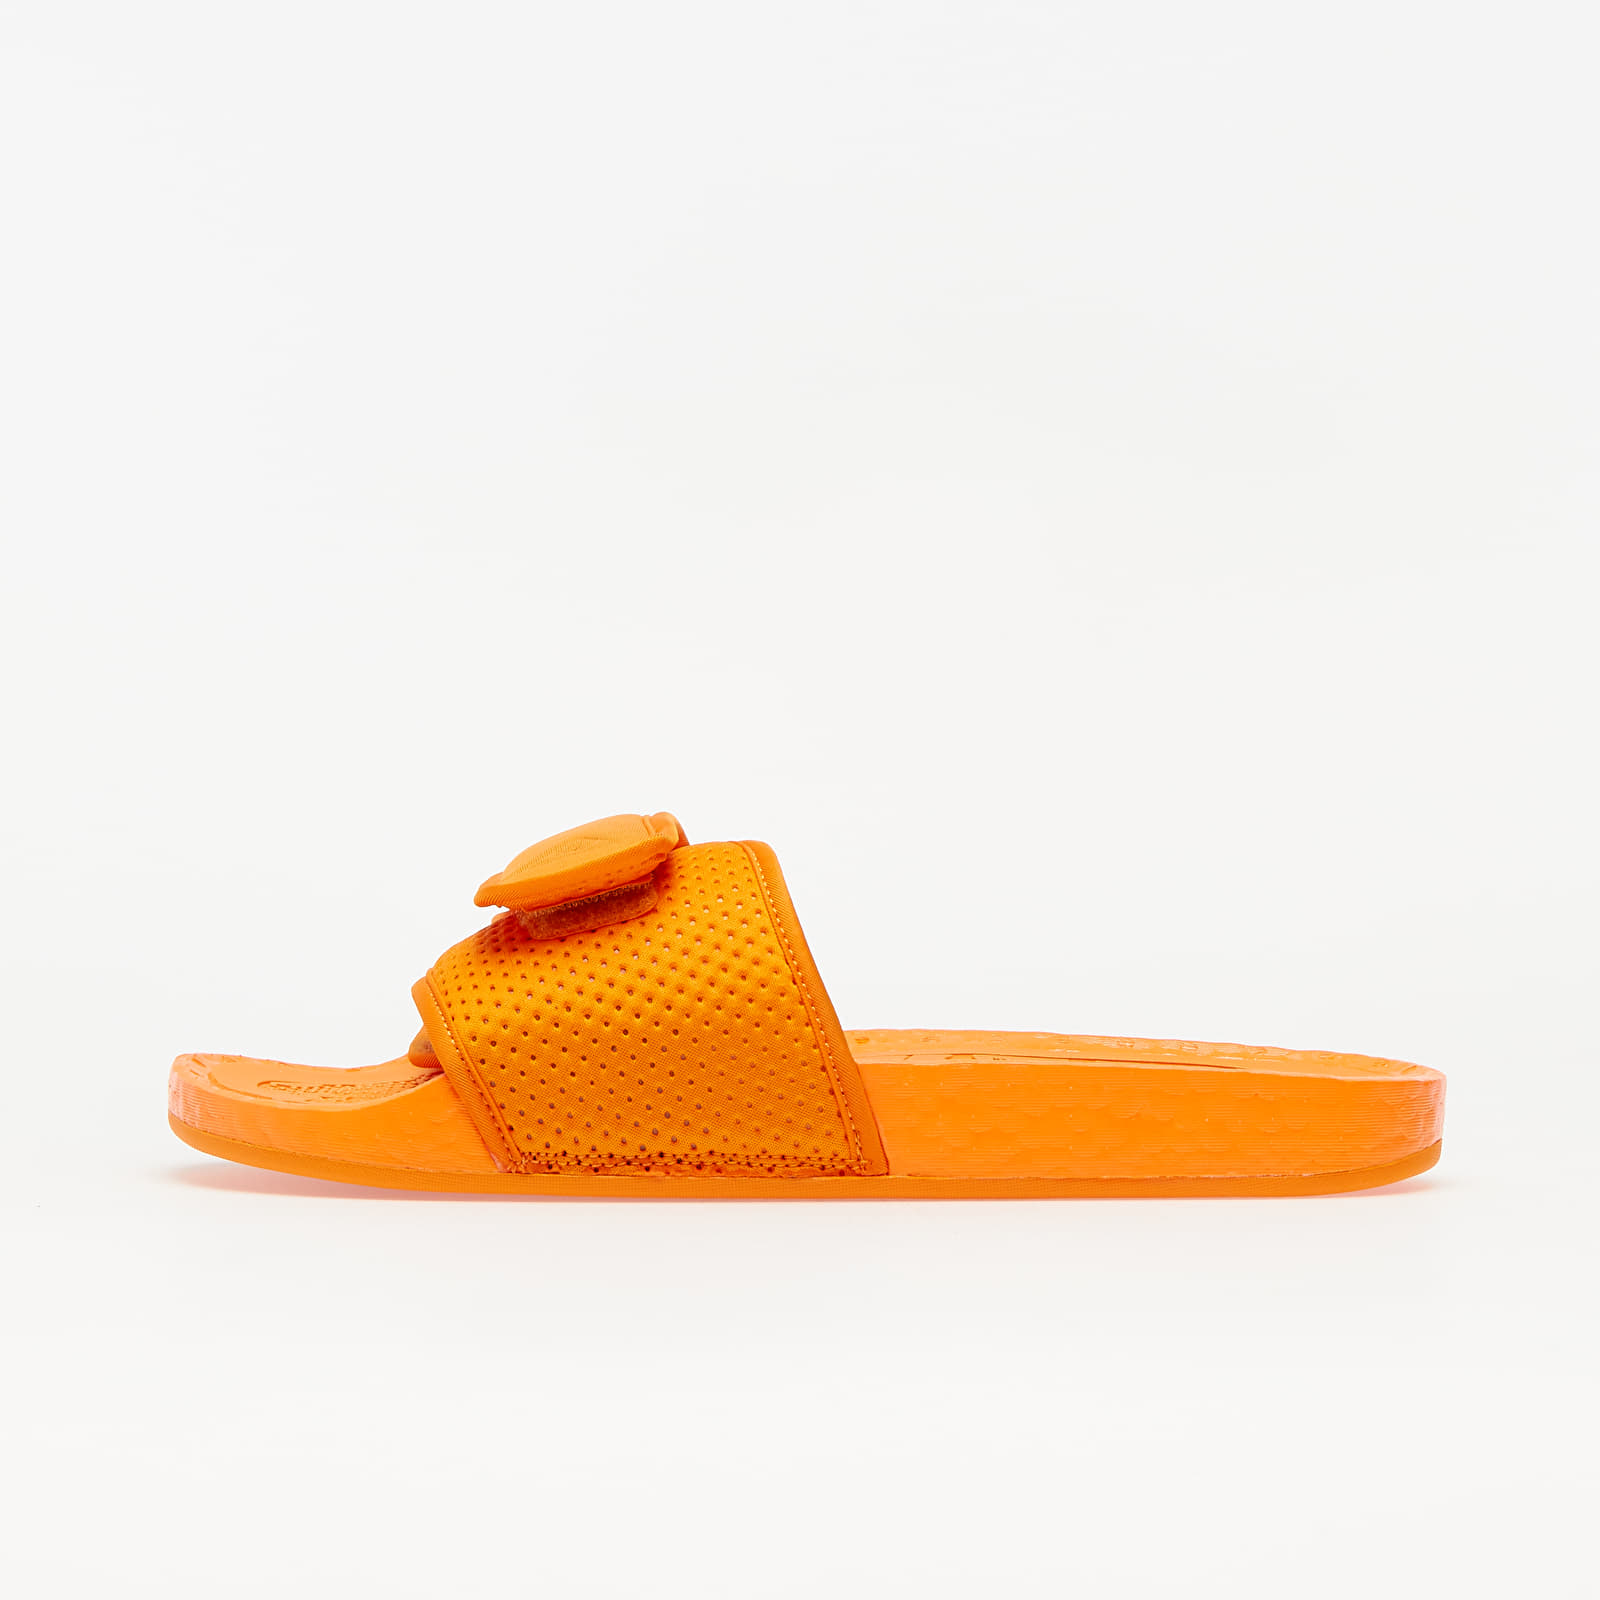 Încălțăminte și sneakerși pentru bărbați adidas x Pharrell Williams Chancletas HU Bright Orange/ Bright Orange/ Bright Orange